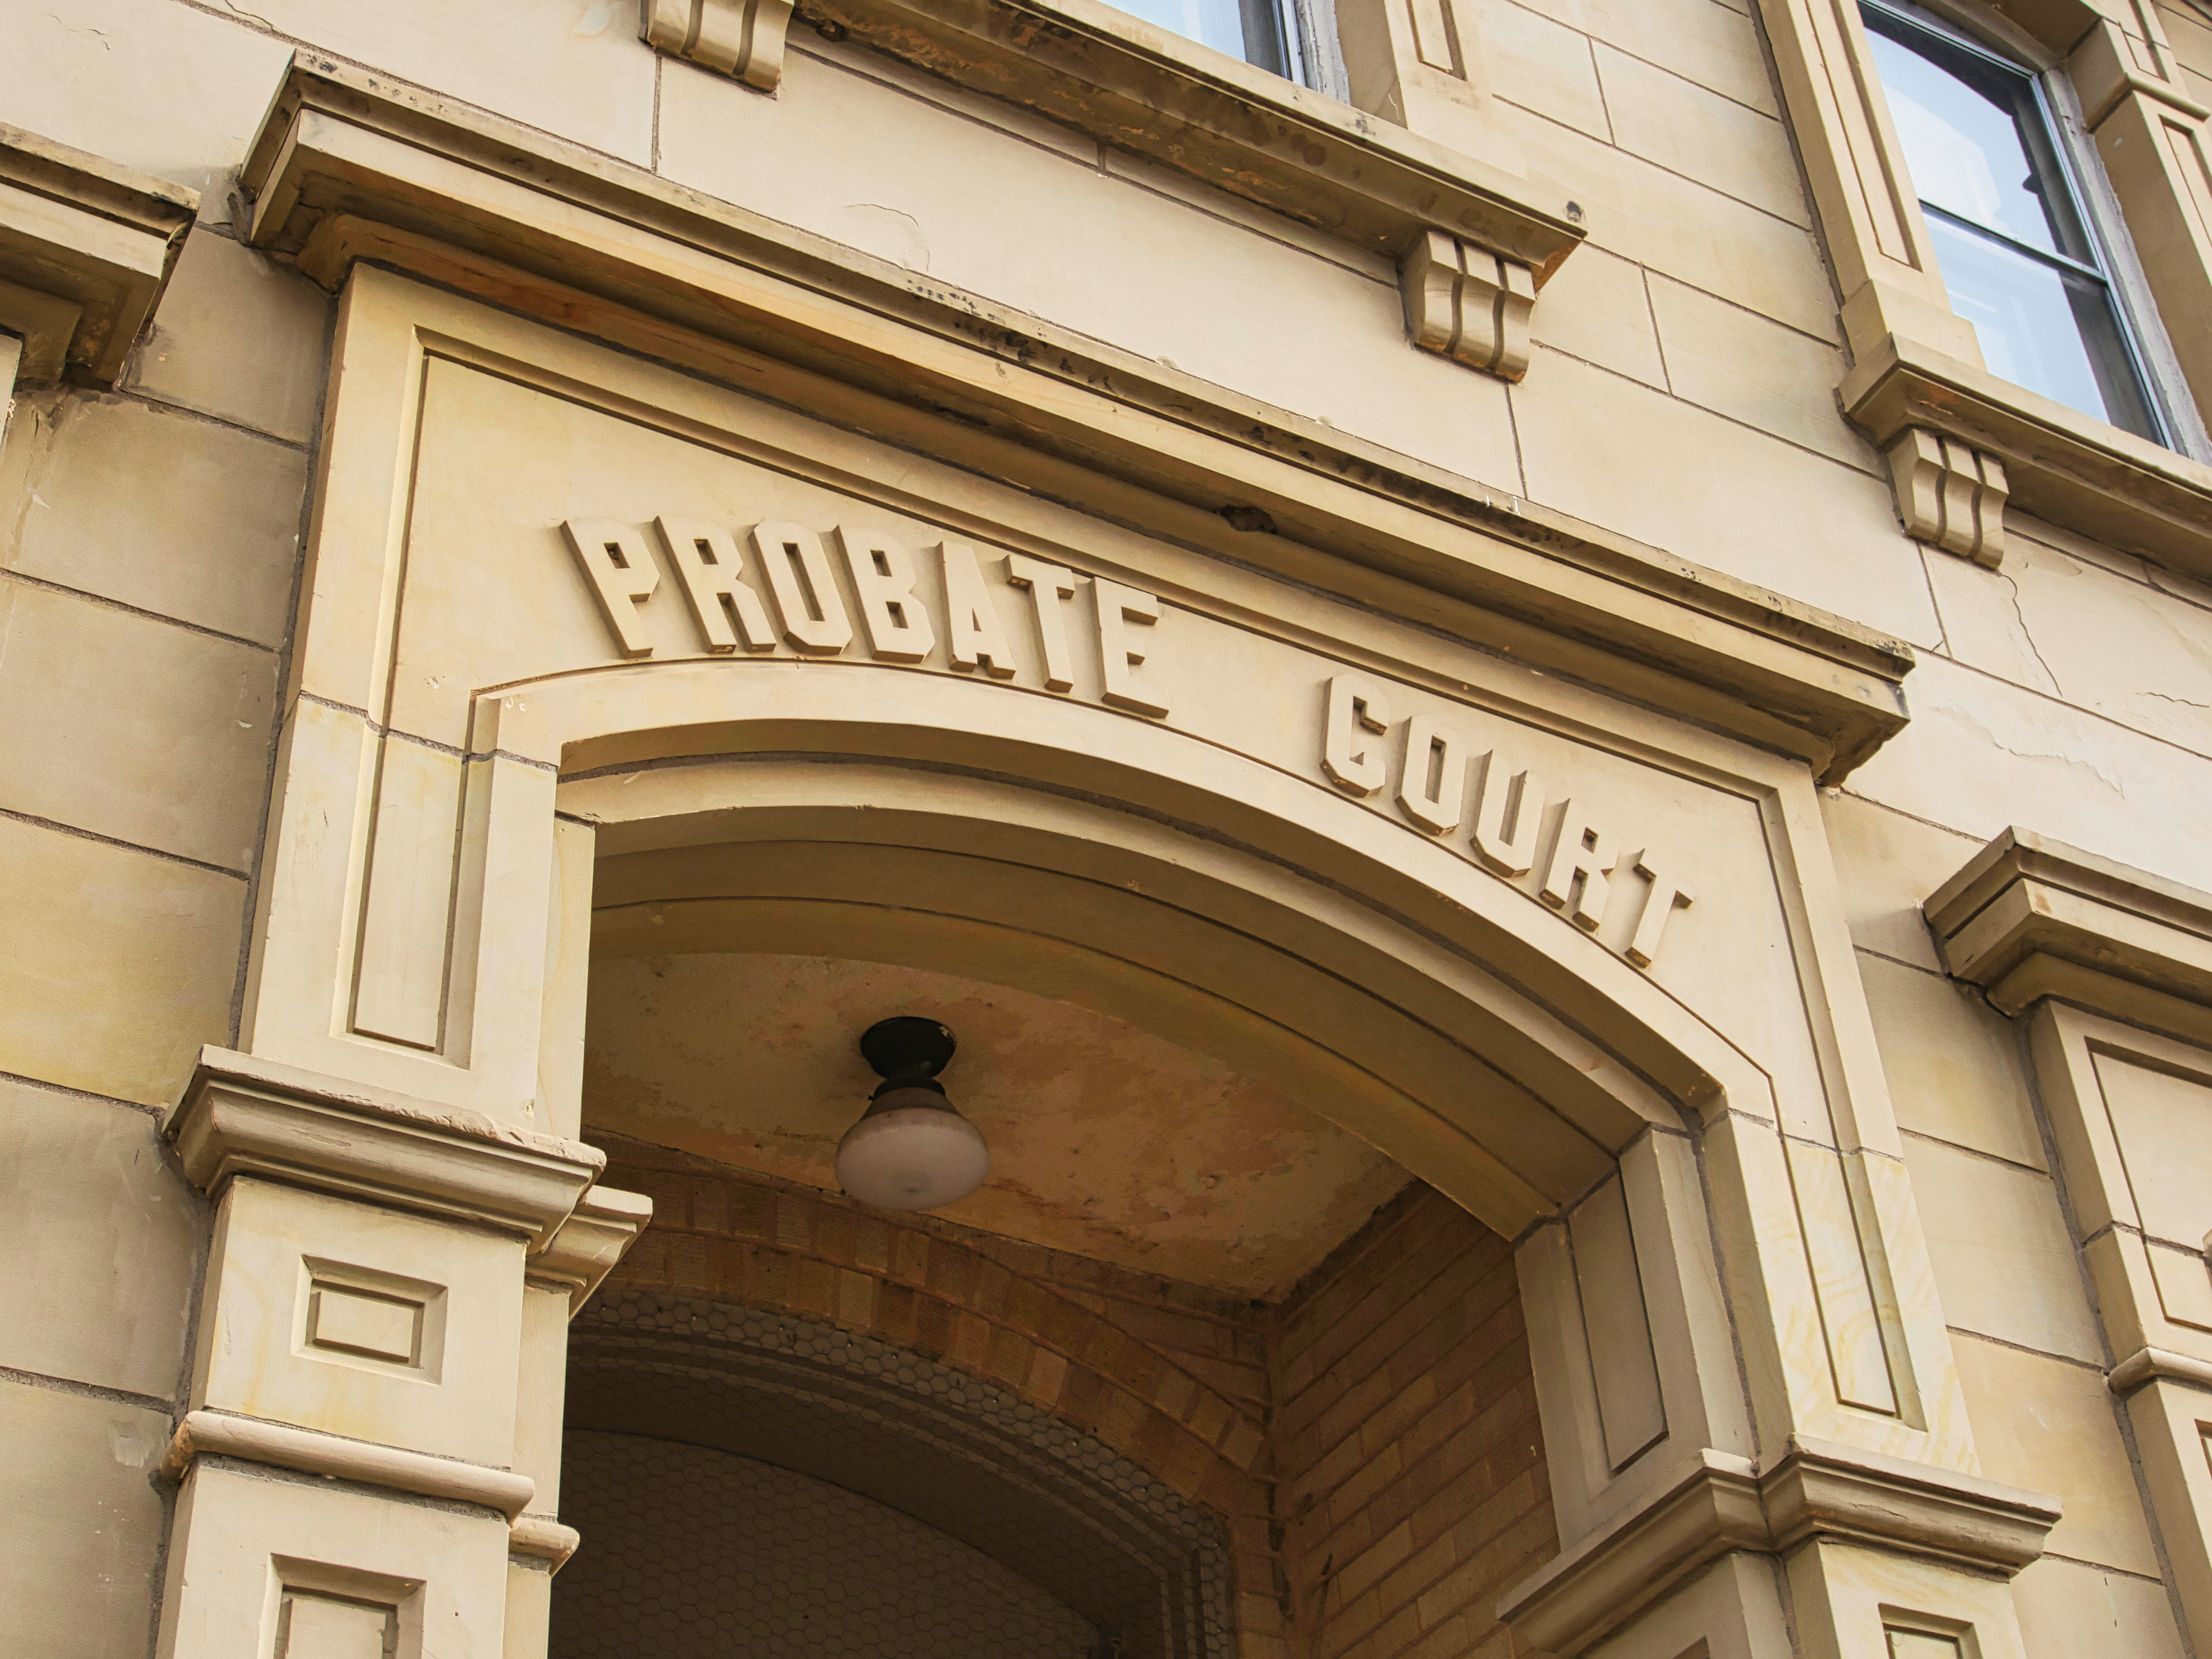 Probate court proceedings